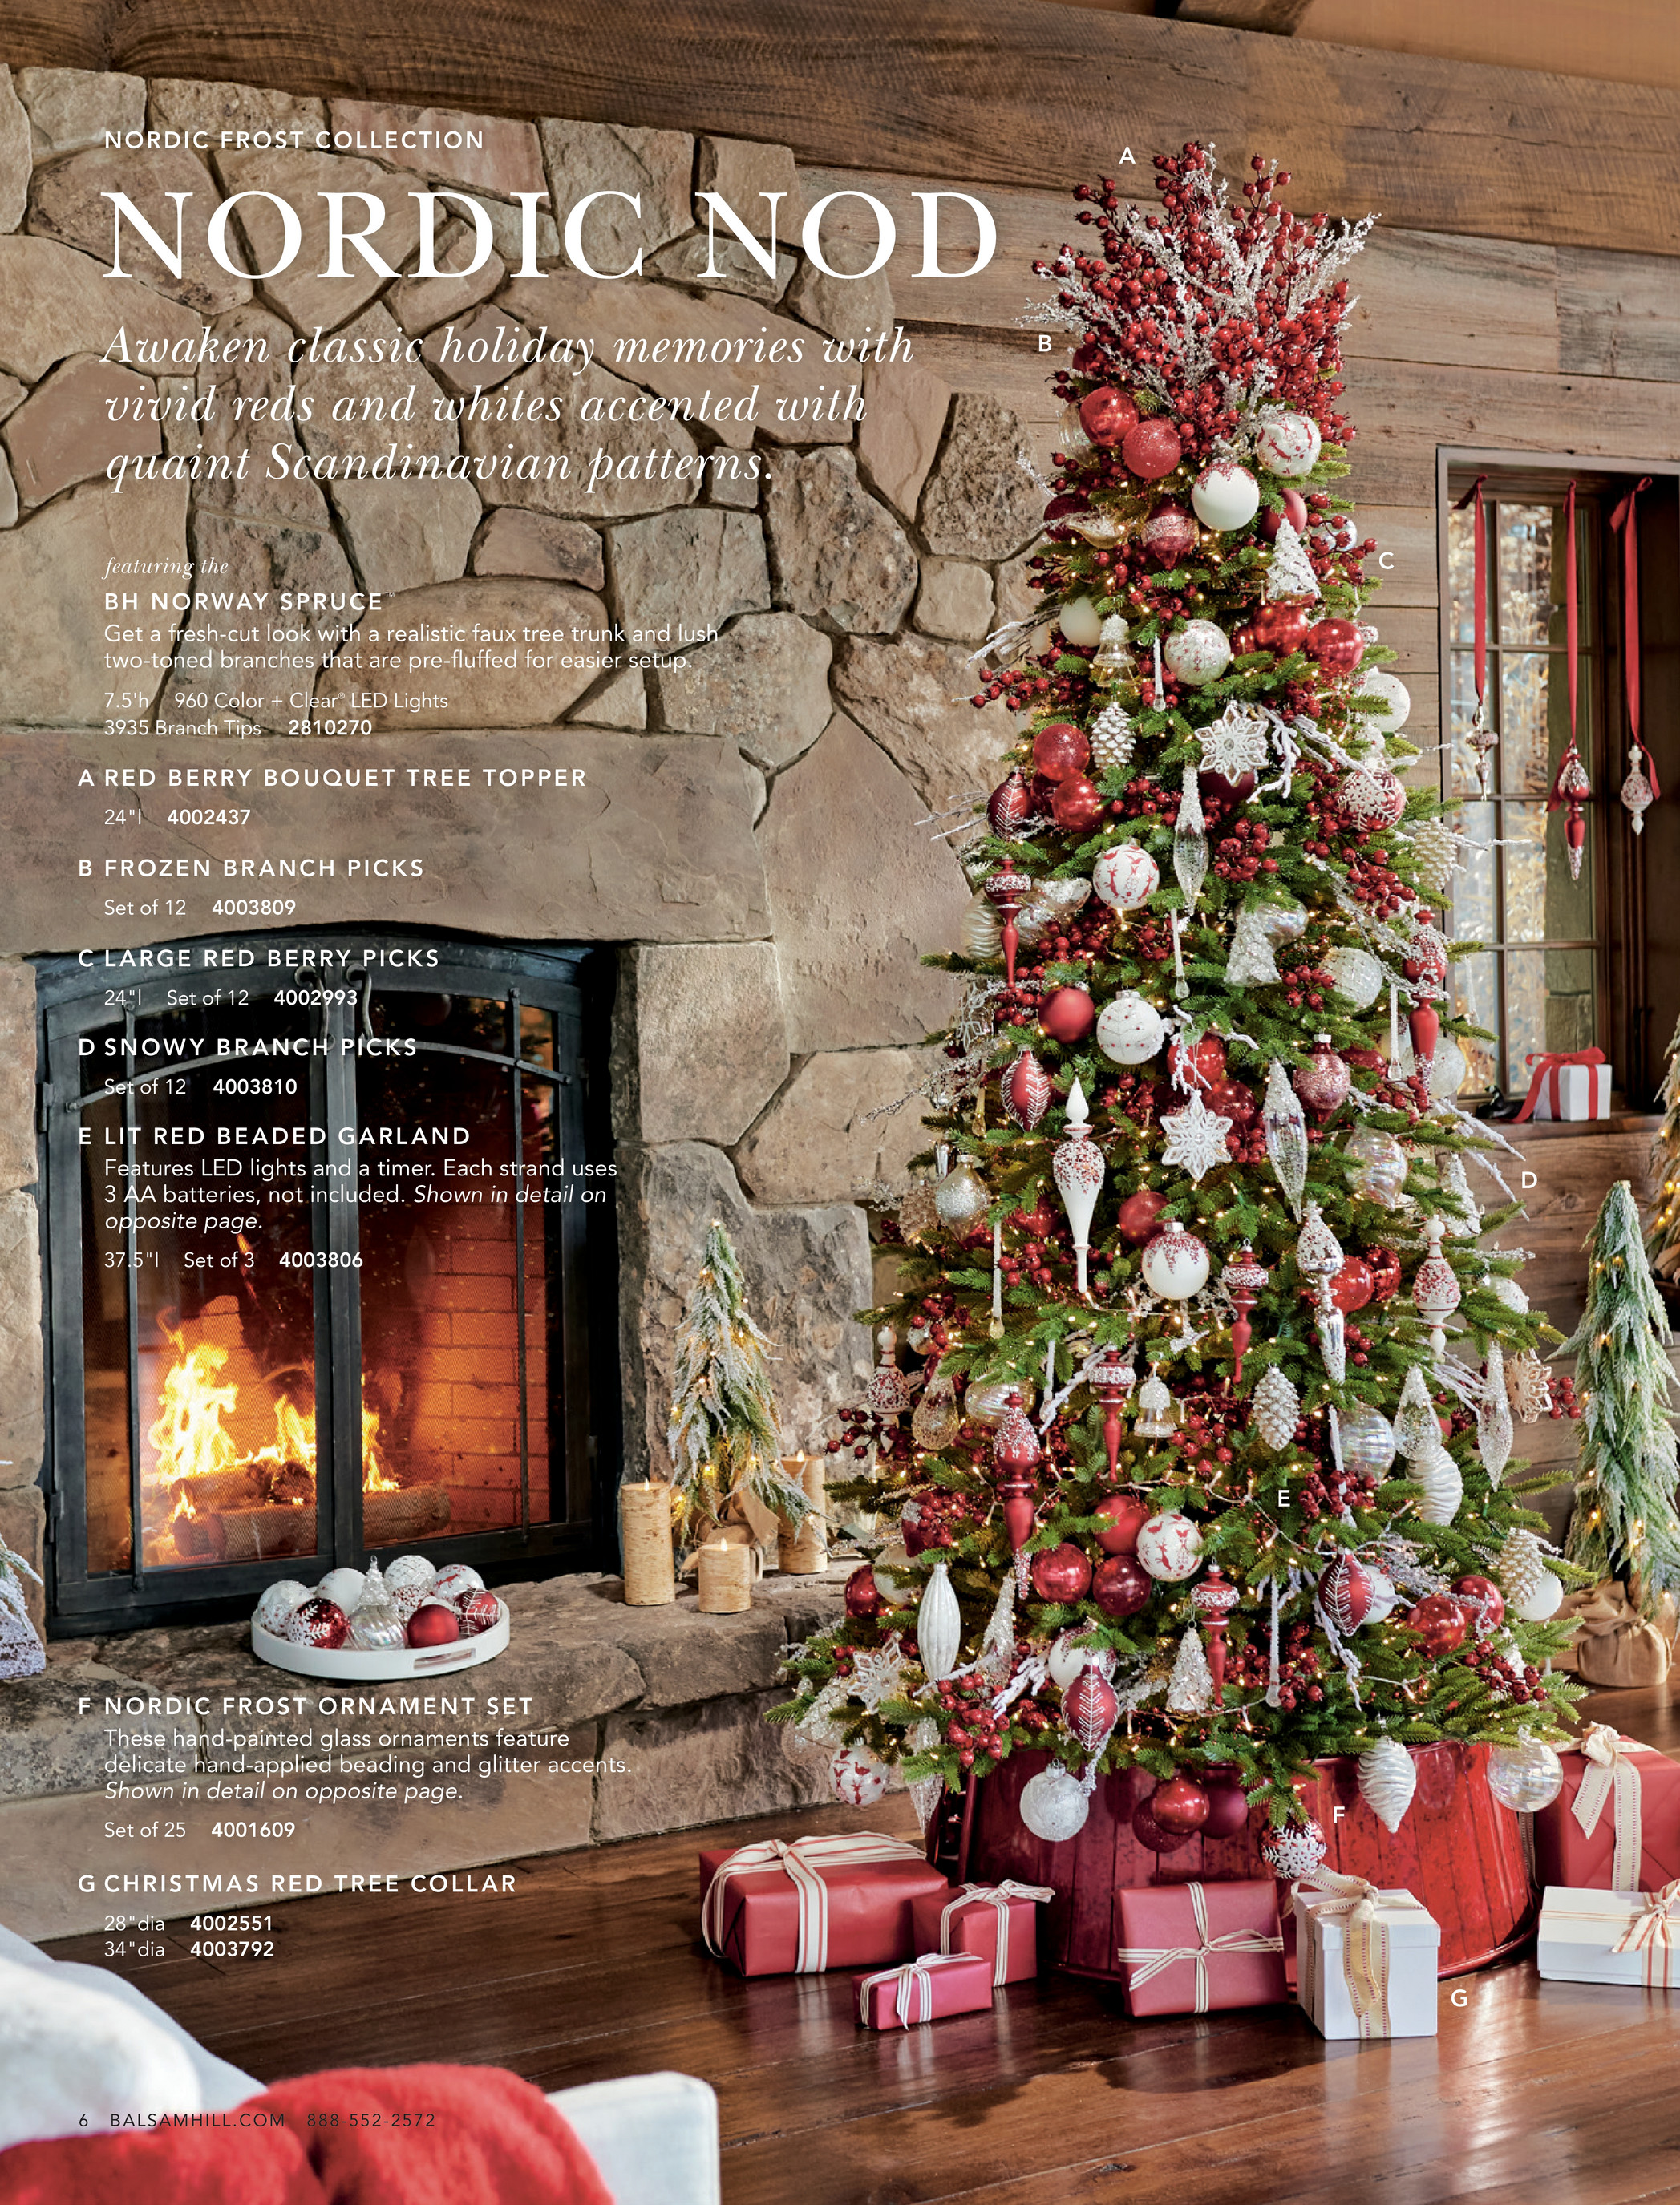 FROZEN BRANCH PICKS SET OF 12 CHRISTMAS TREE DECORATION